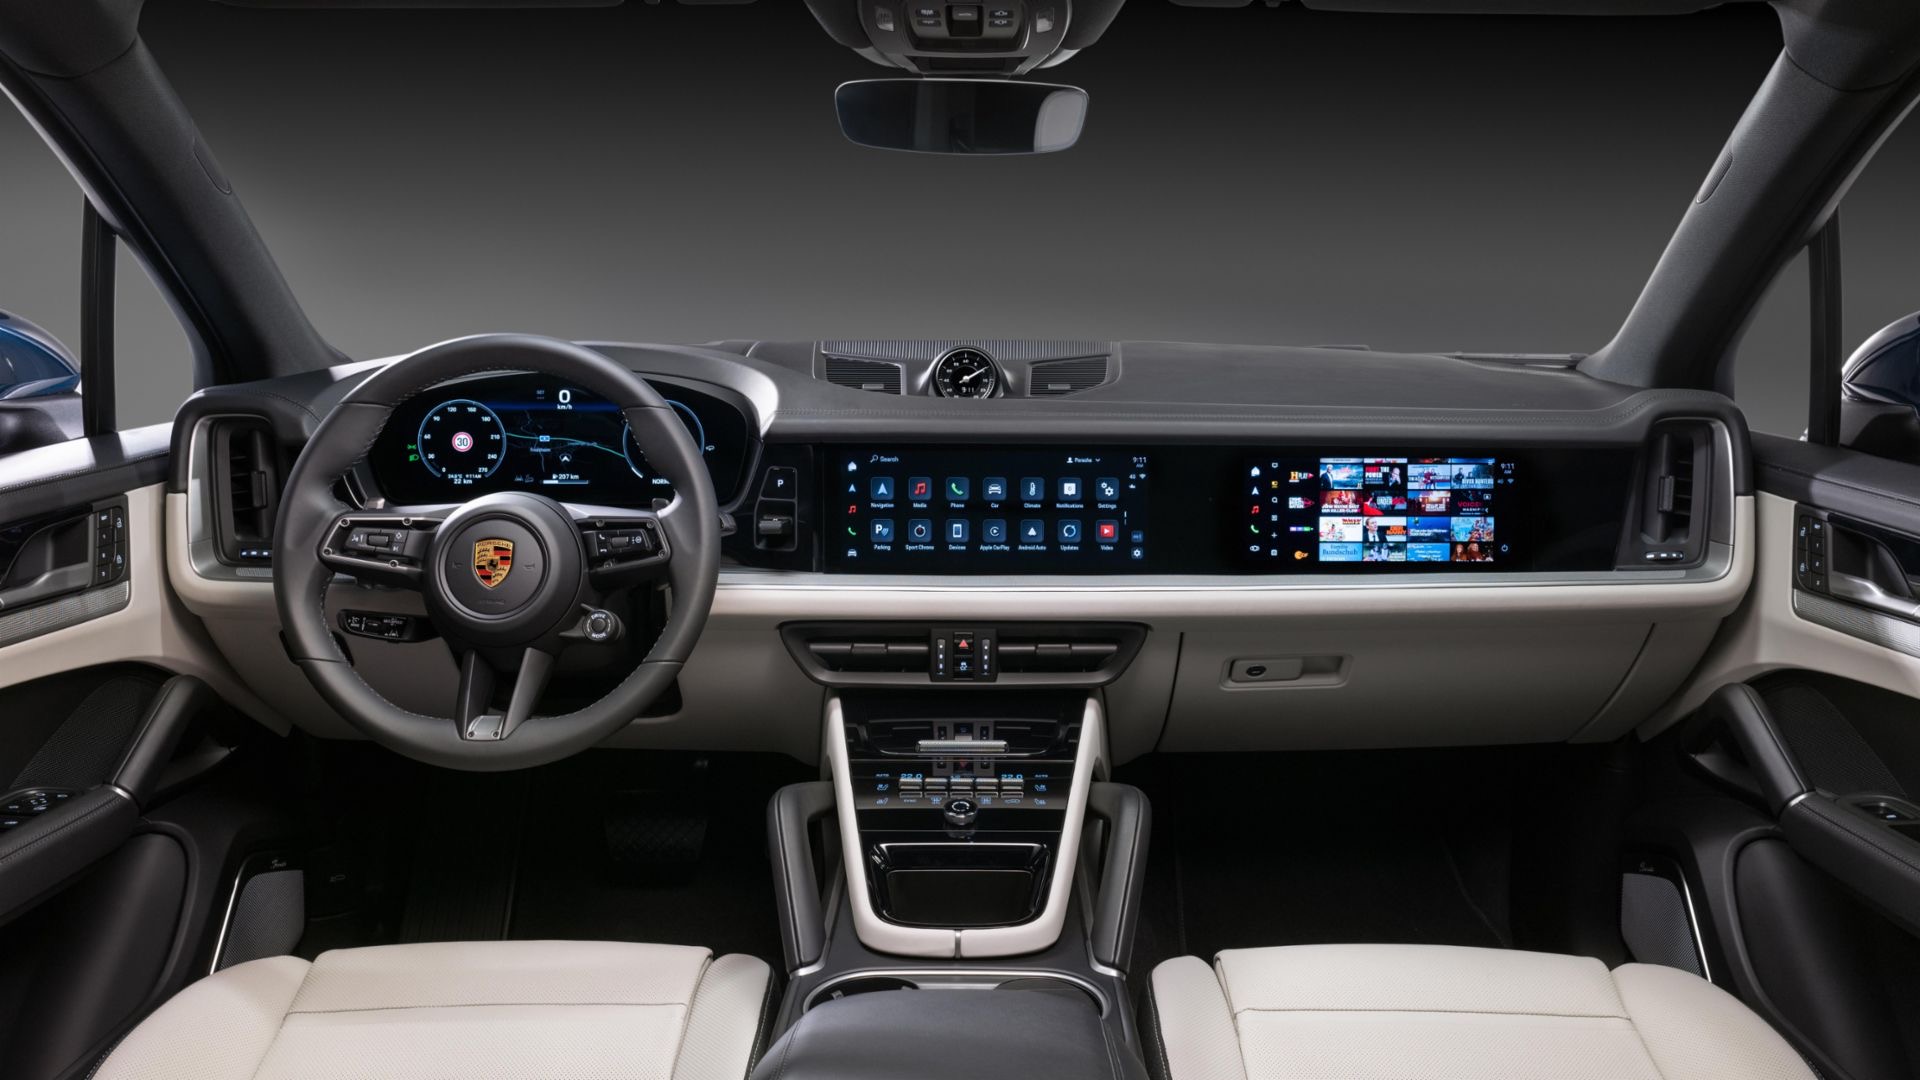 2024 Porsche Cayenne interior revealed with 3 digital screens